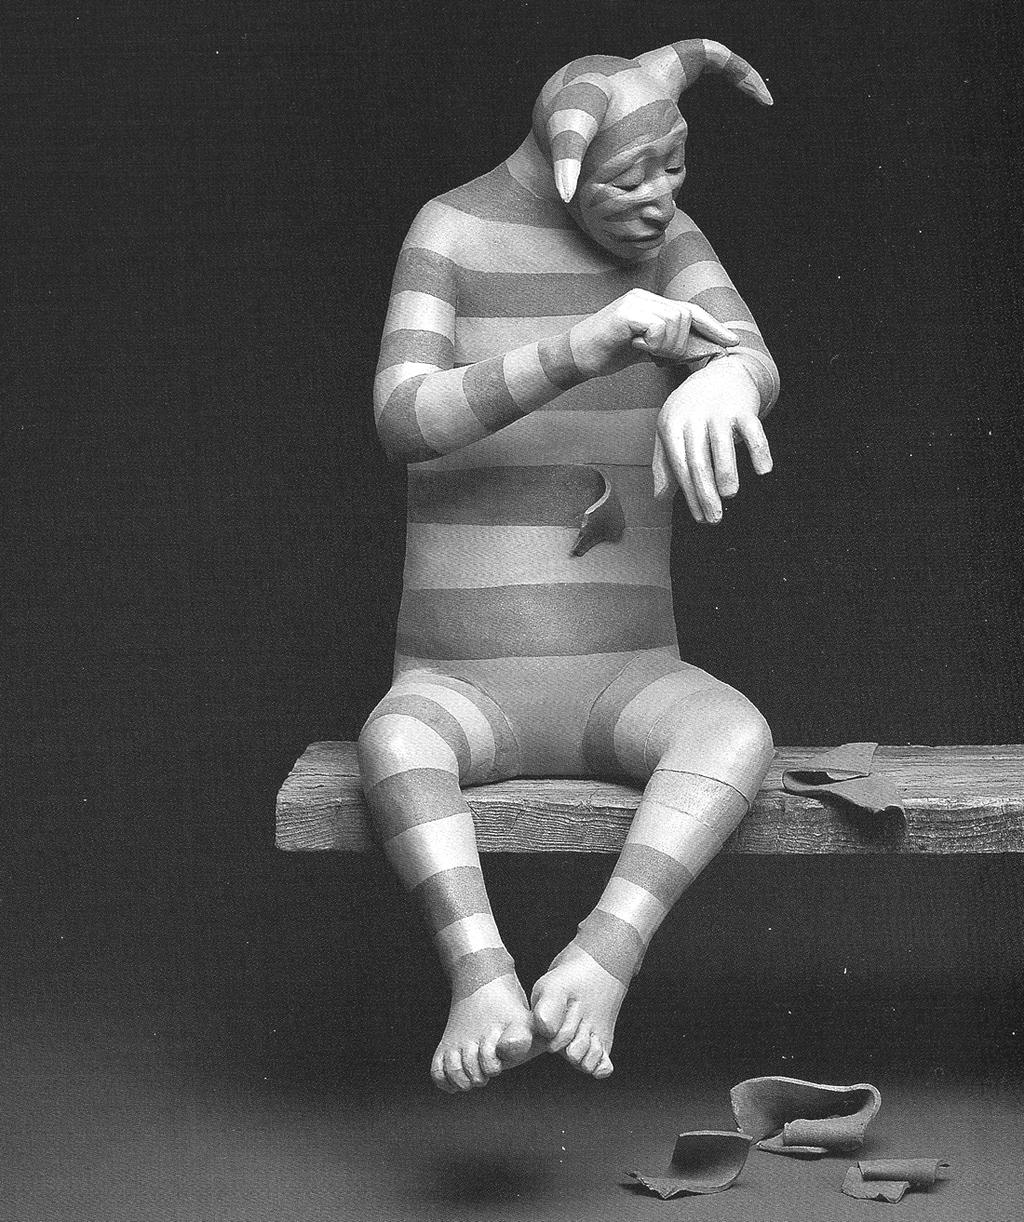 92 Figure 16: Despairing Clown by Roxanne Swentzell, 1991.